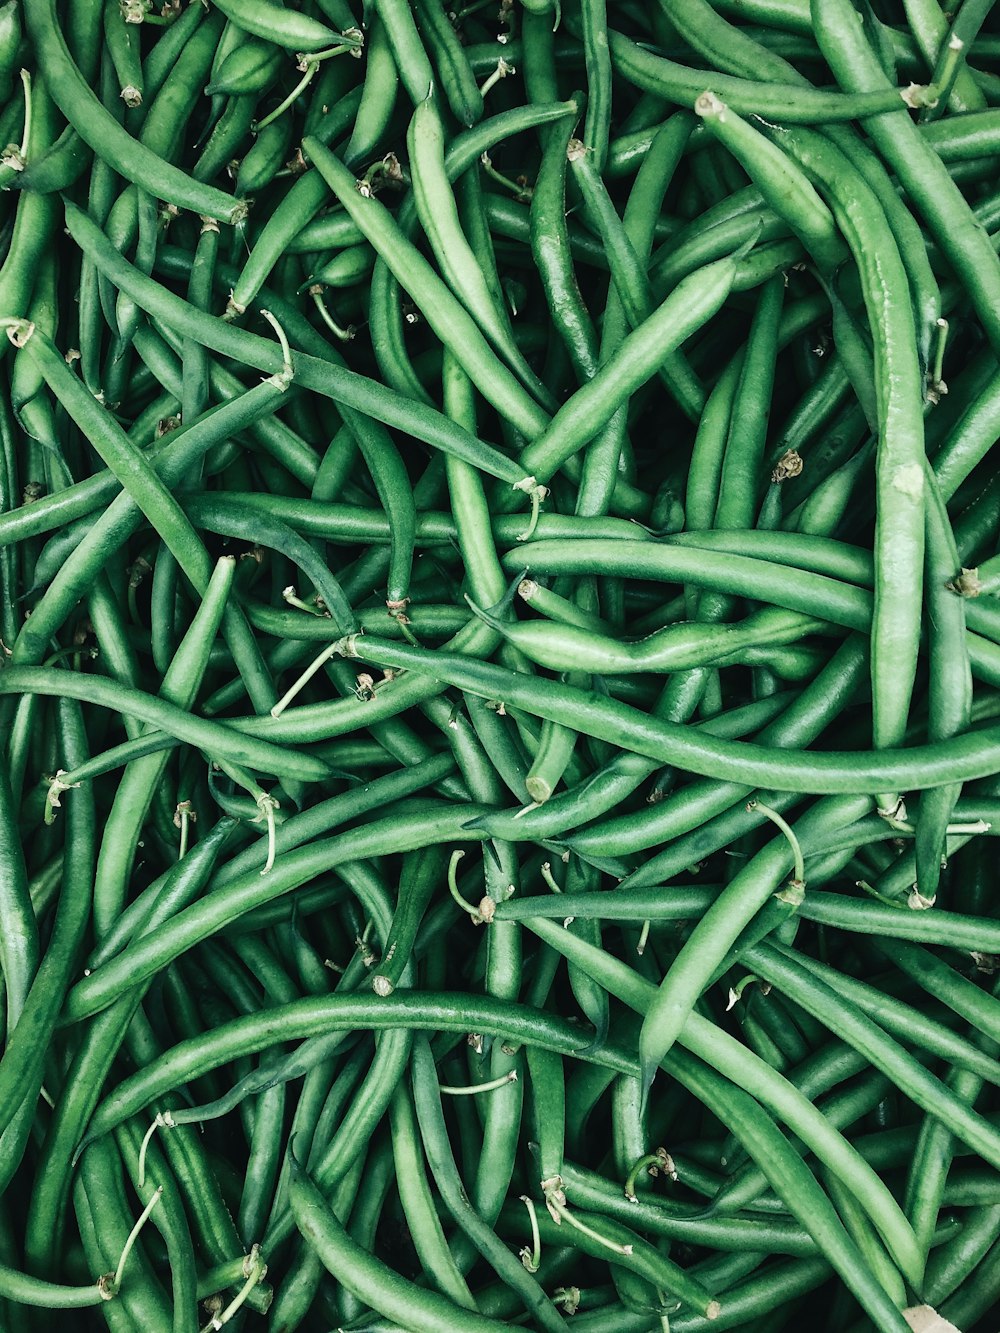 green string beans